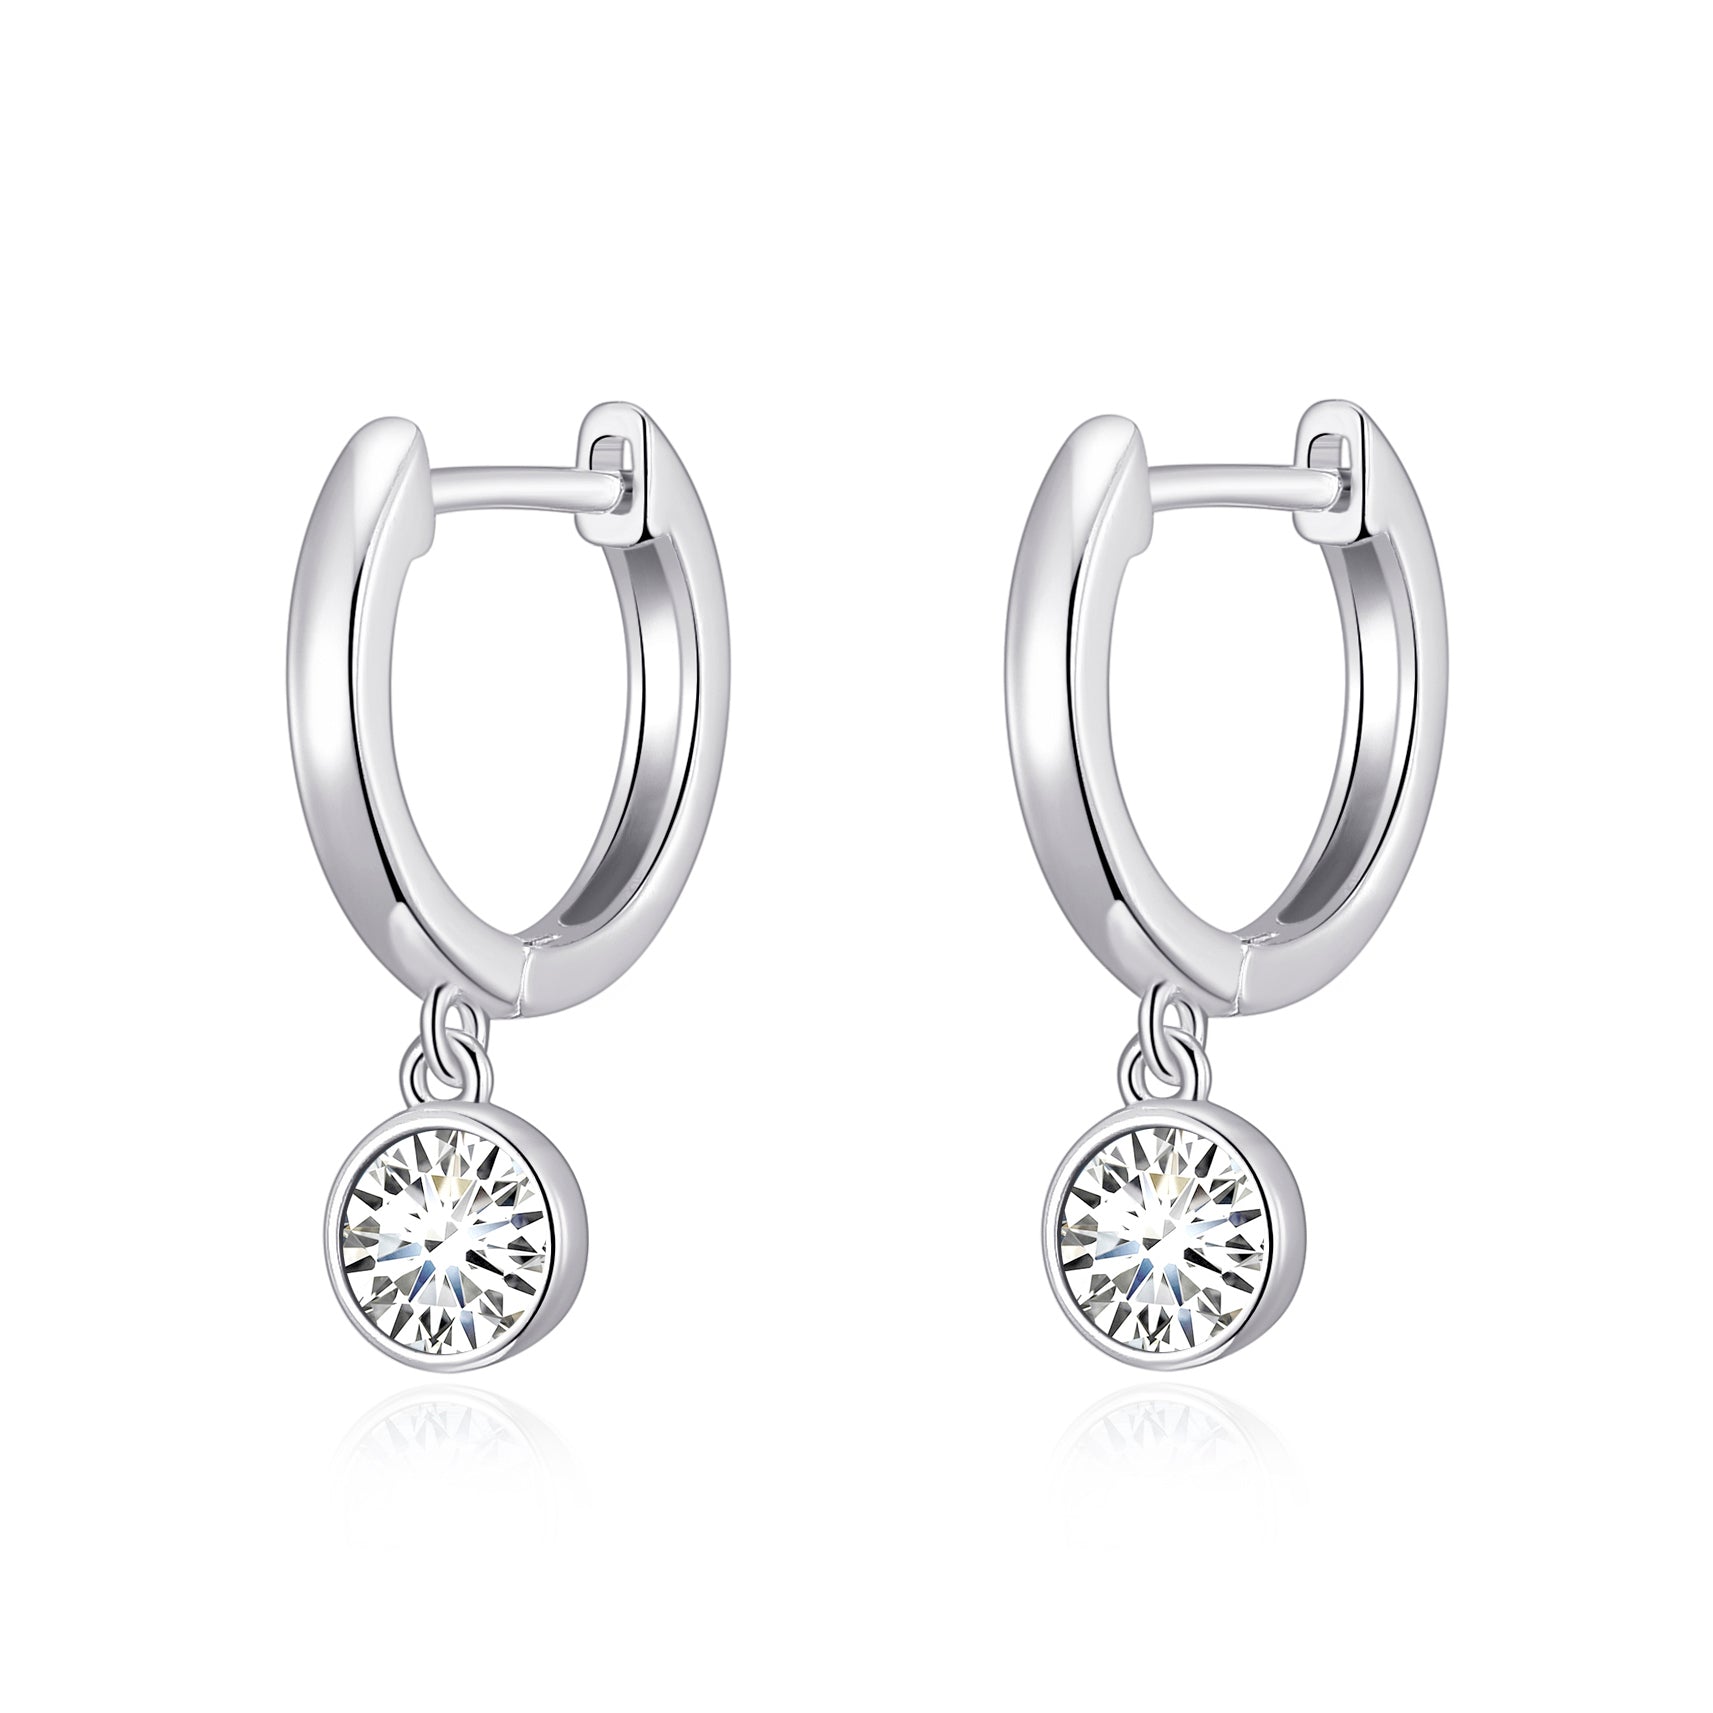 Crystal Hoop Earrings Created with Zircondia® Crystals by Philip Jones Jewellery